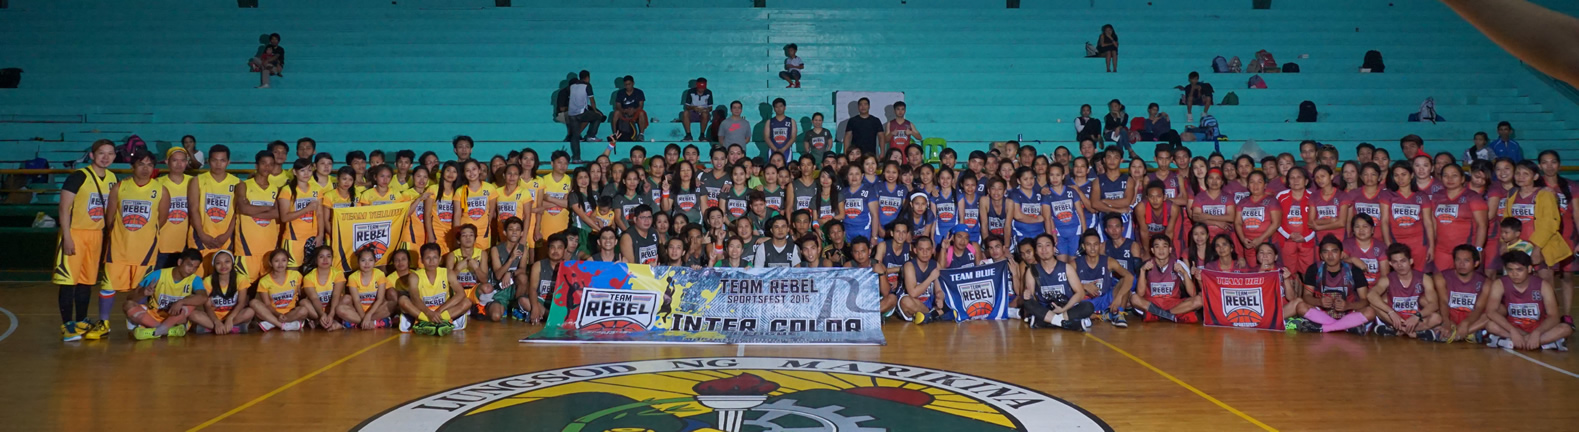 Team Rebel Sports Pilipinas